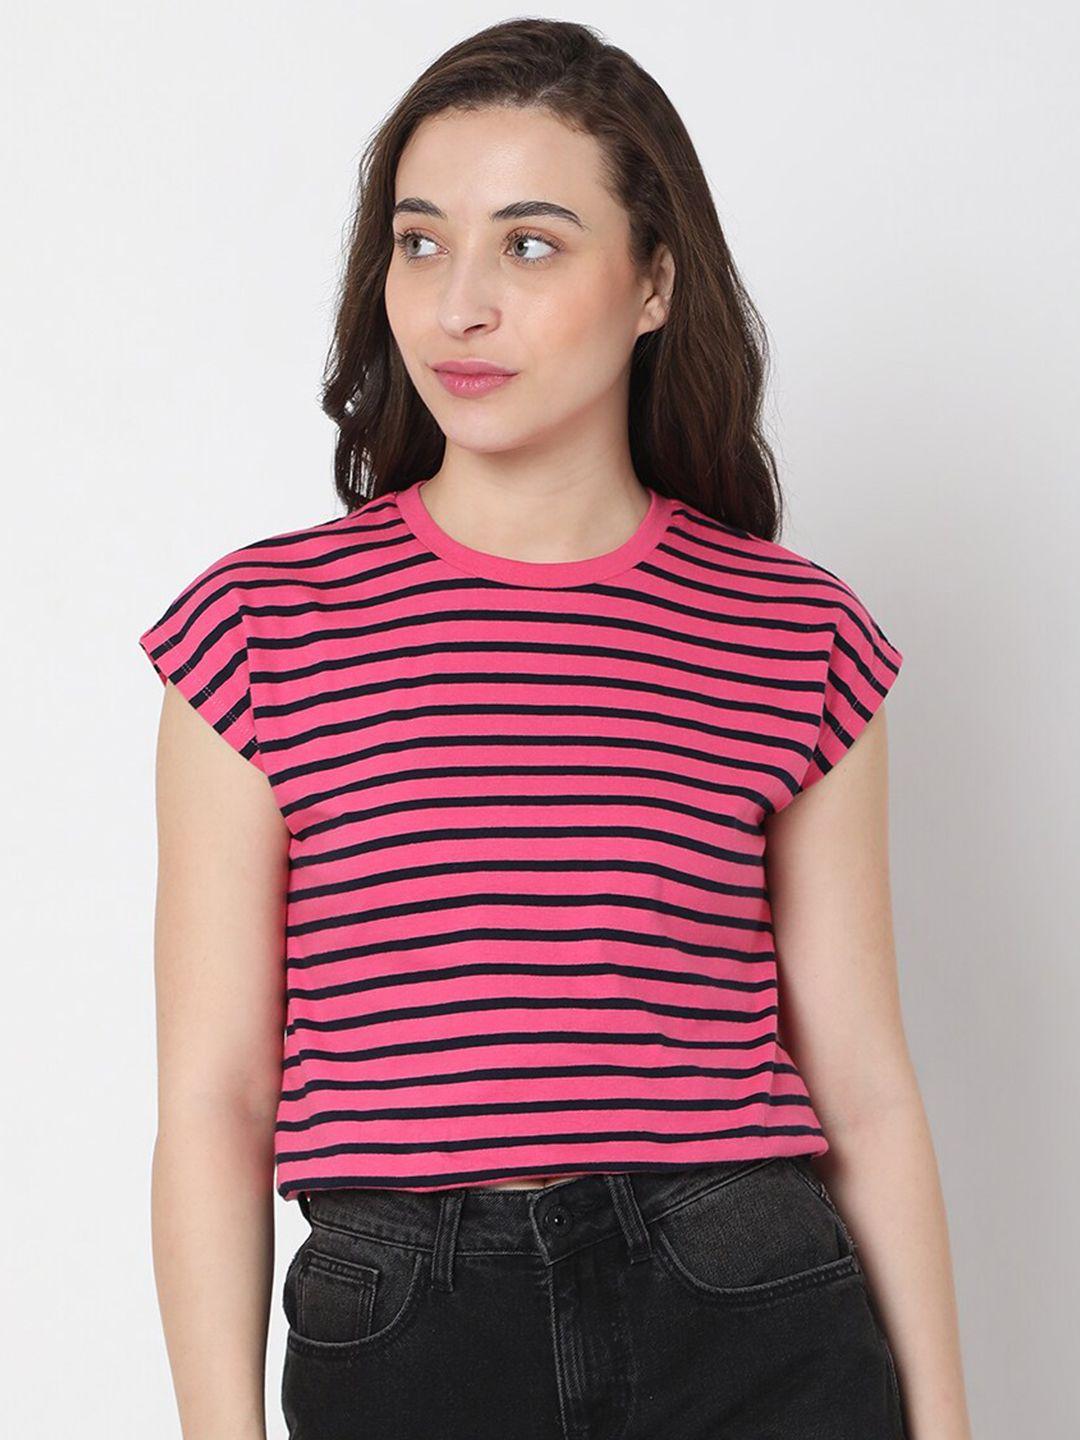 vero moda women pink & black striped extended sleeves t-shirt